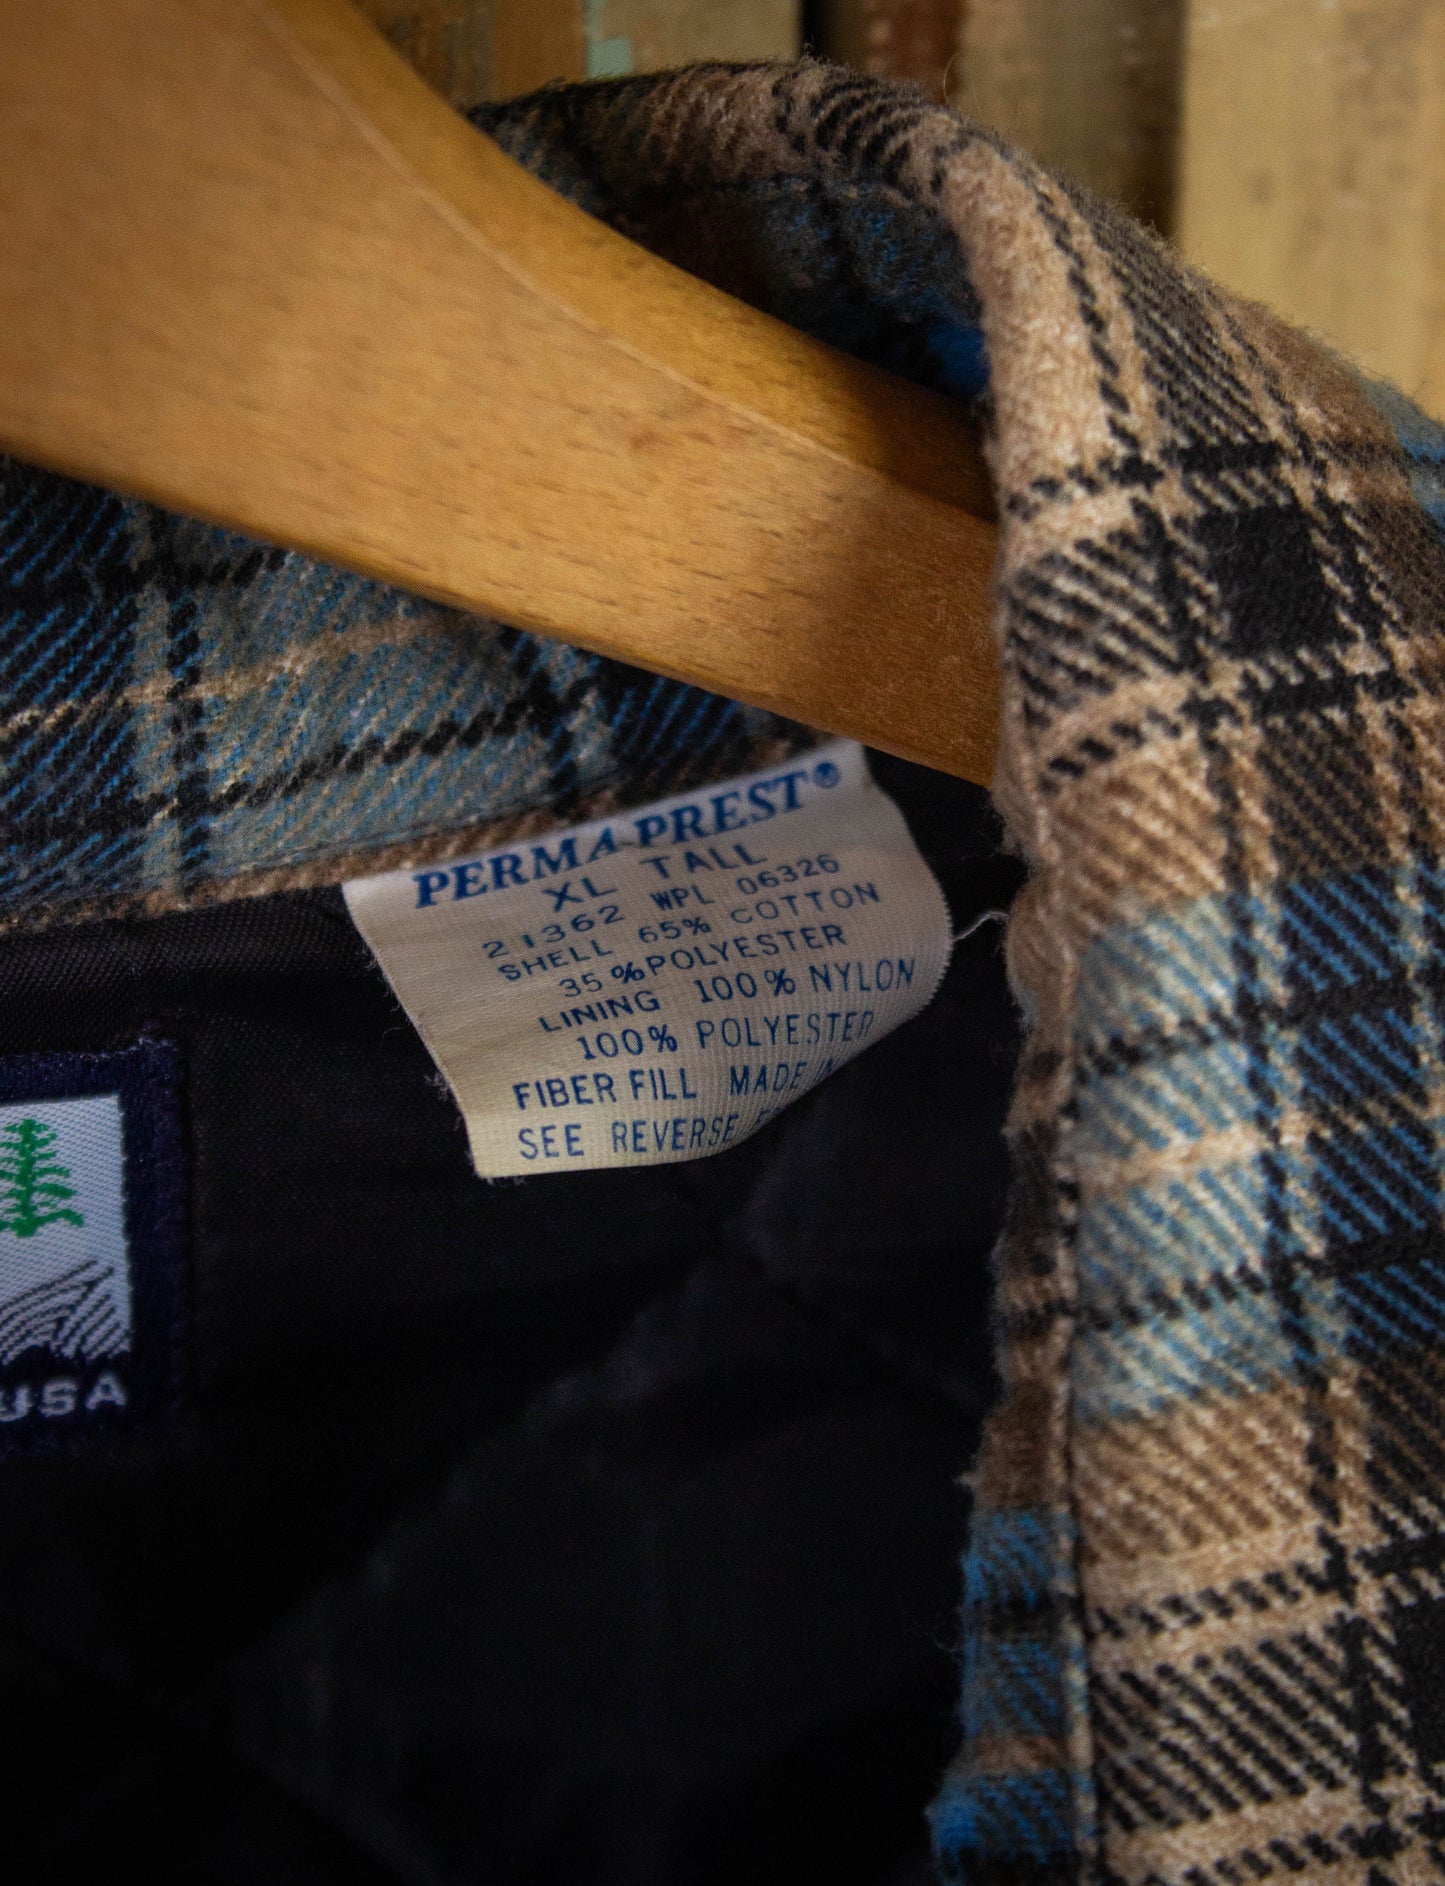 Vintage Fieldmaster Quilt Lined Plaid Flannel Blue/Tan XL